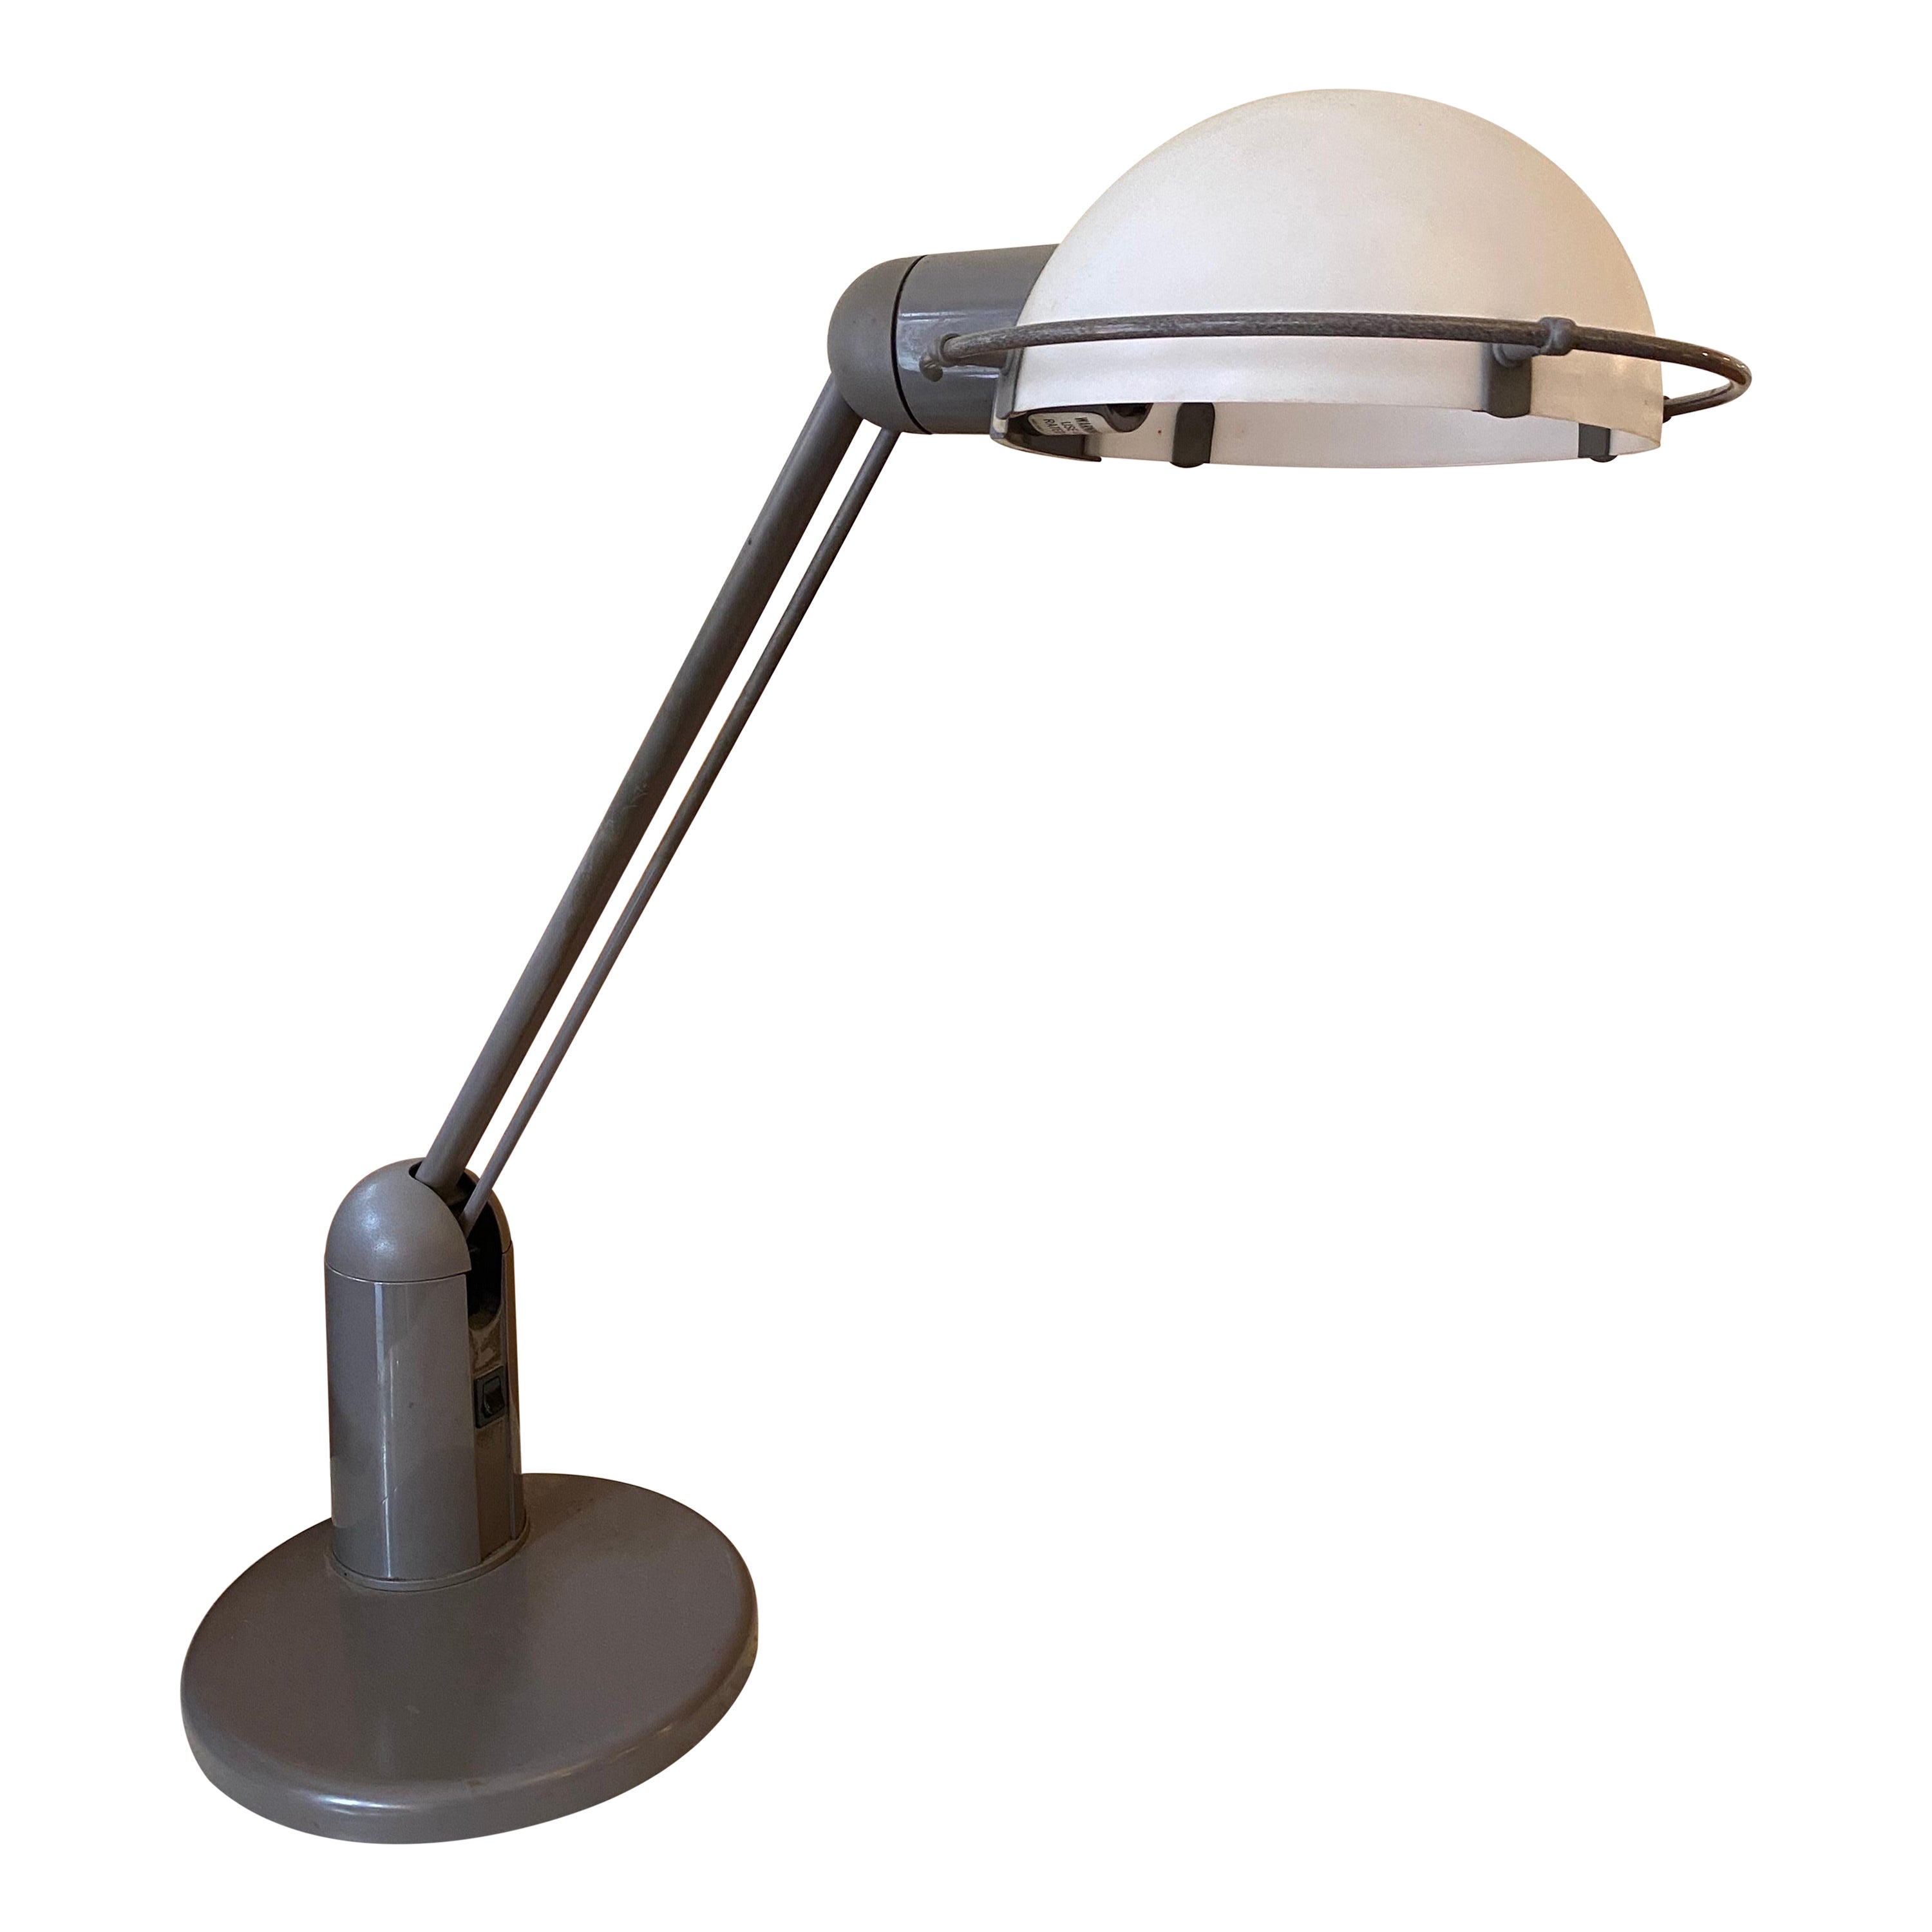 Steelcase Task or Desk Lamp For Sale